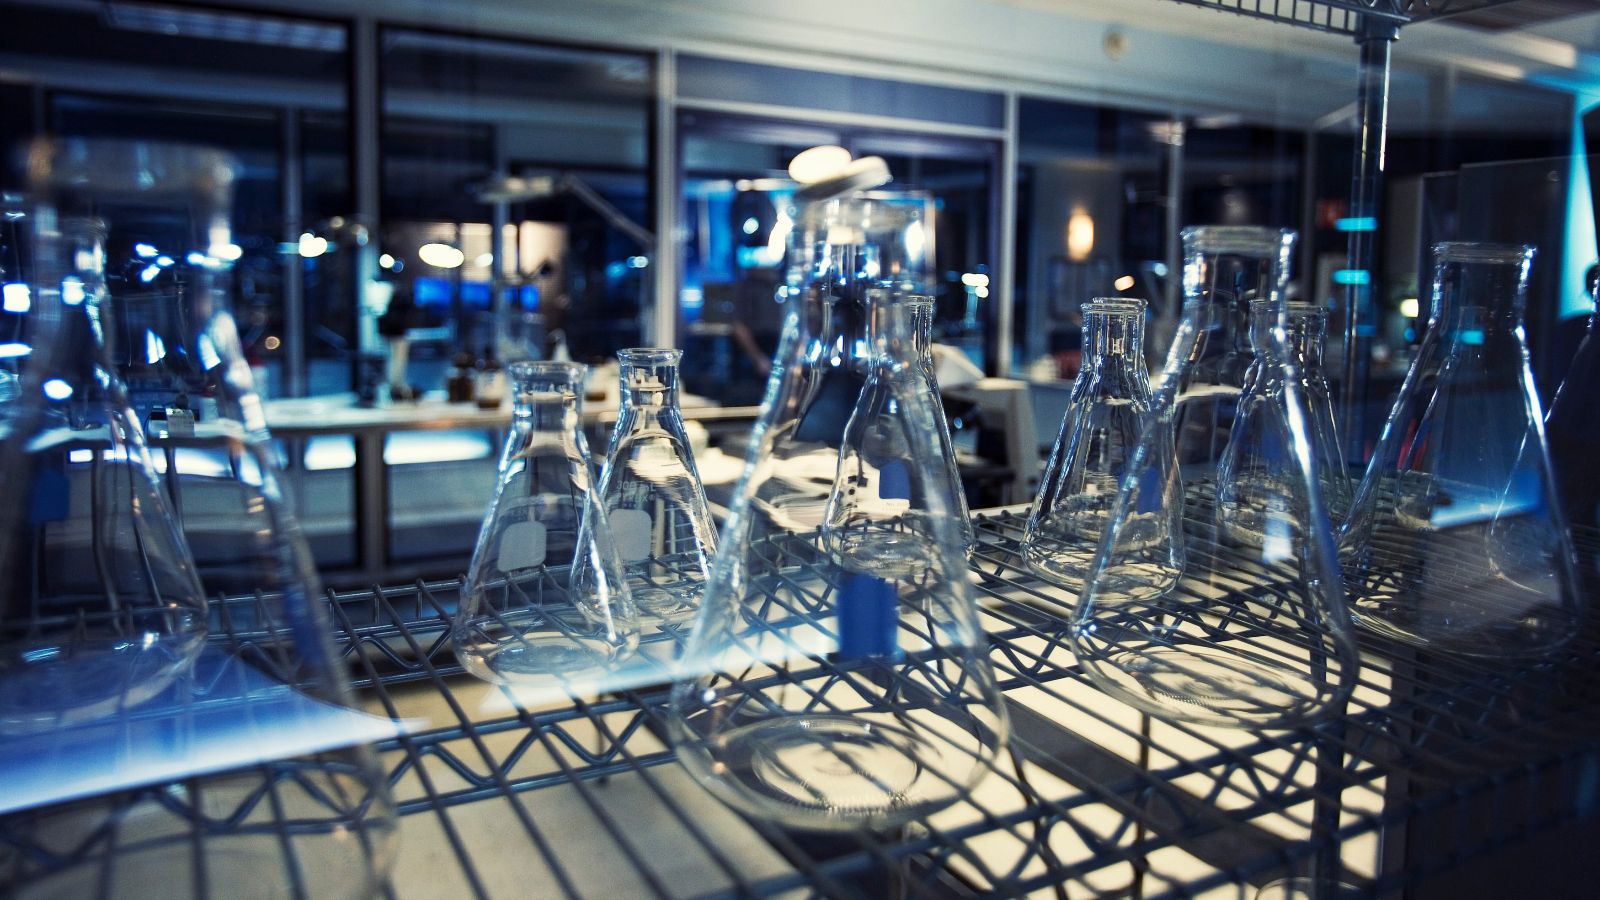 A dozen or so glass beakers or flasks sit on a metal shelf